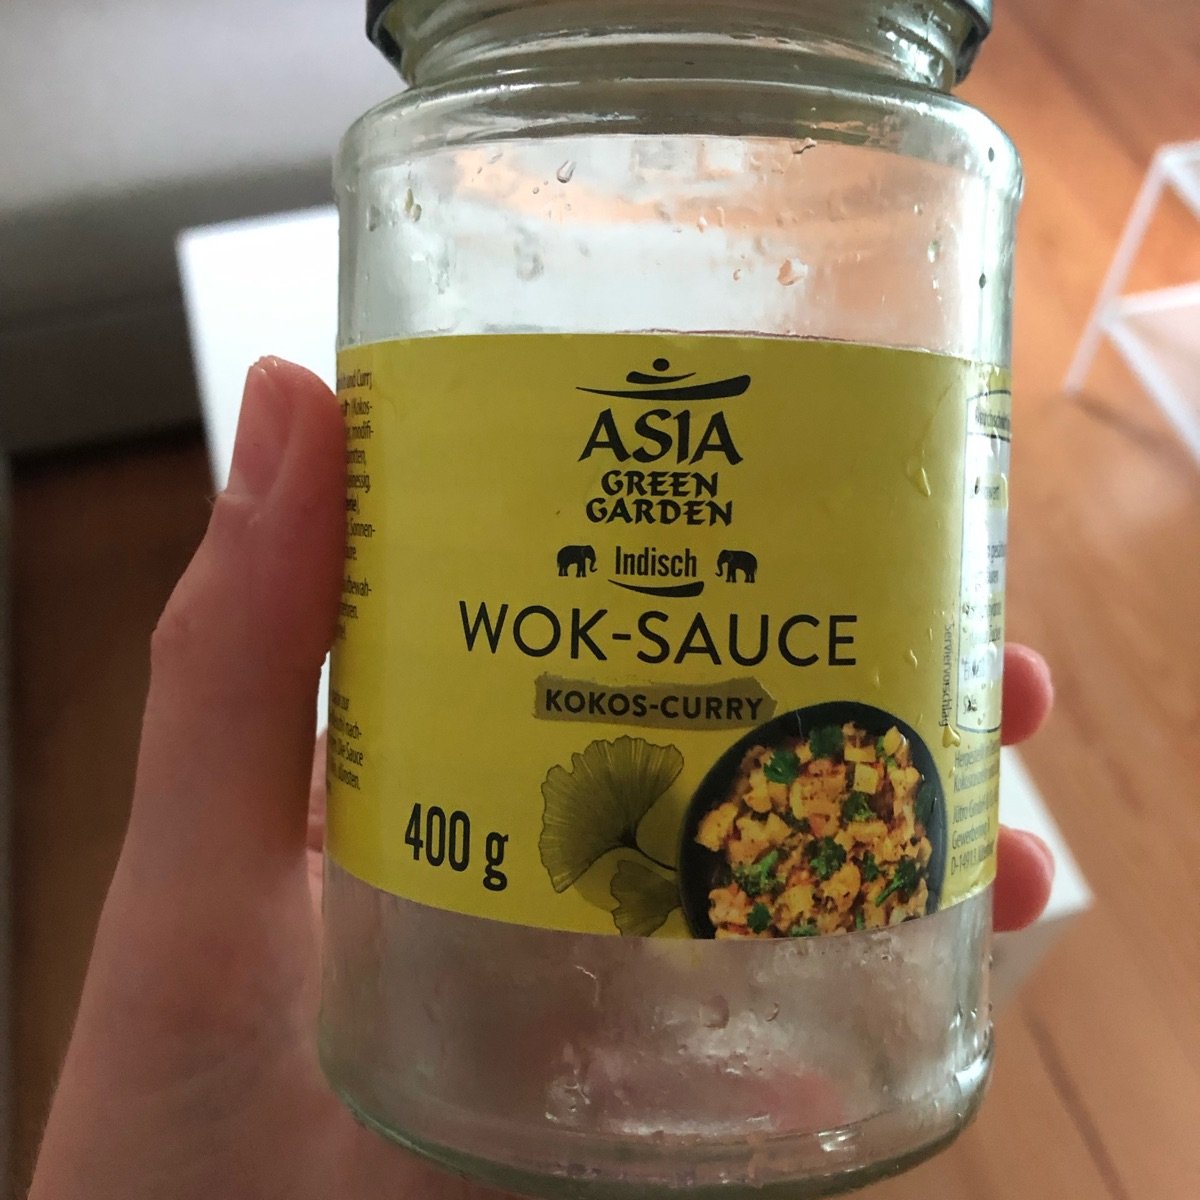 Asia Green Garden Wok-sauce Reviews | abillion